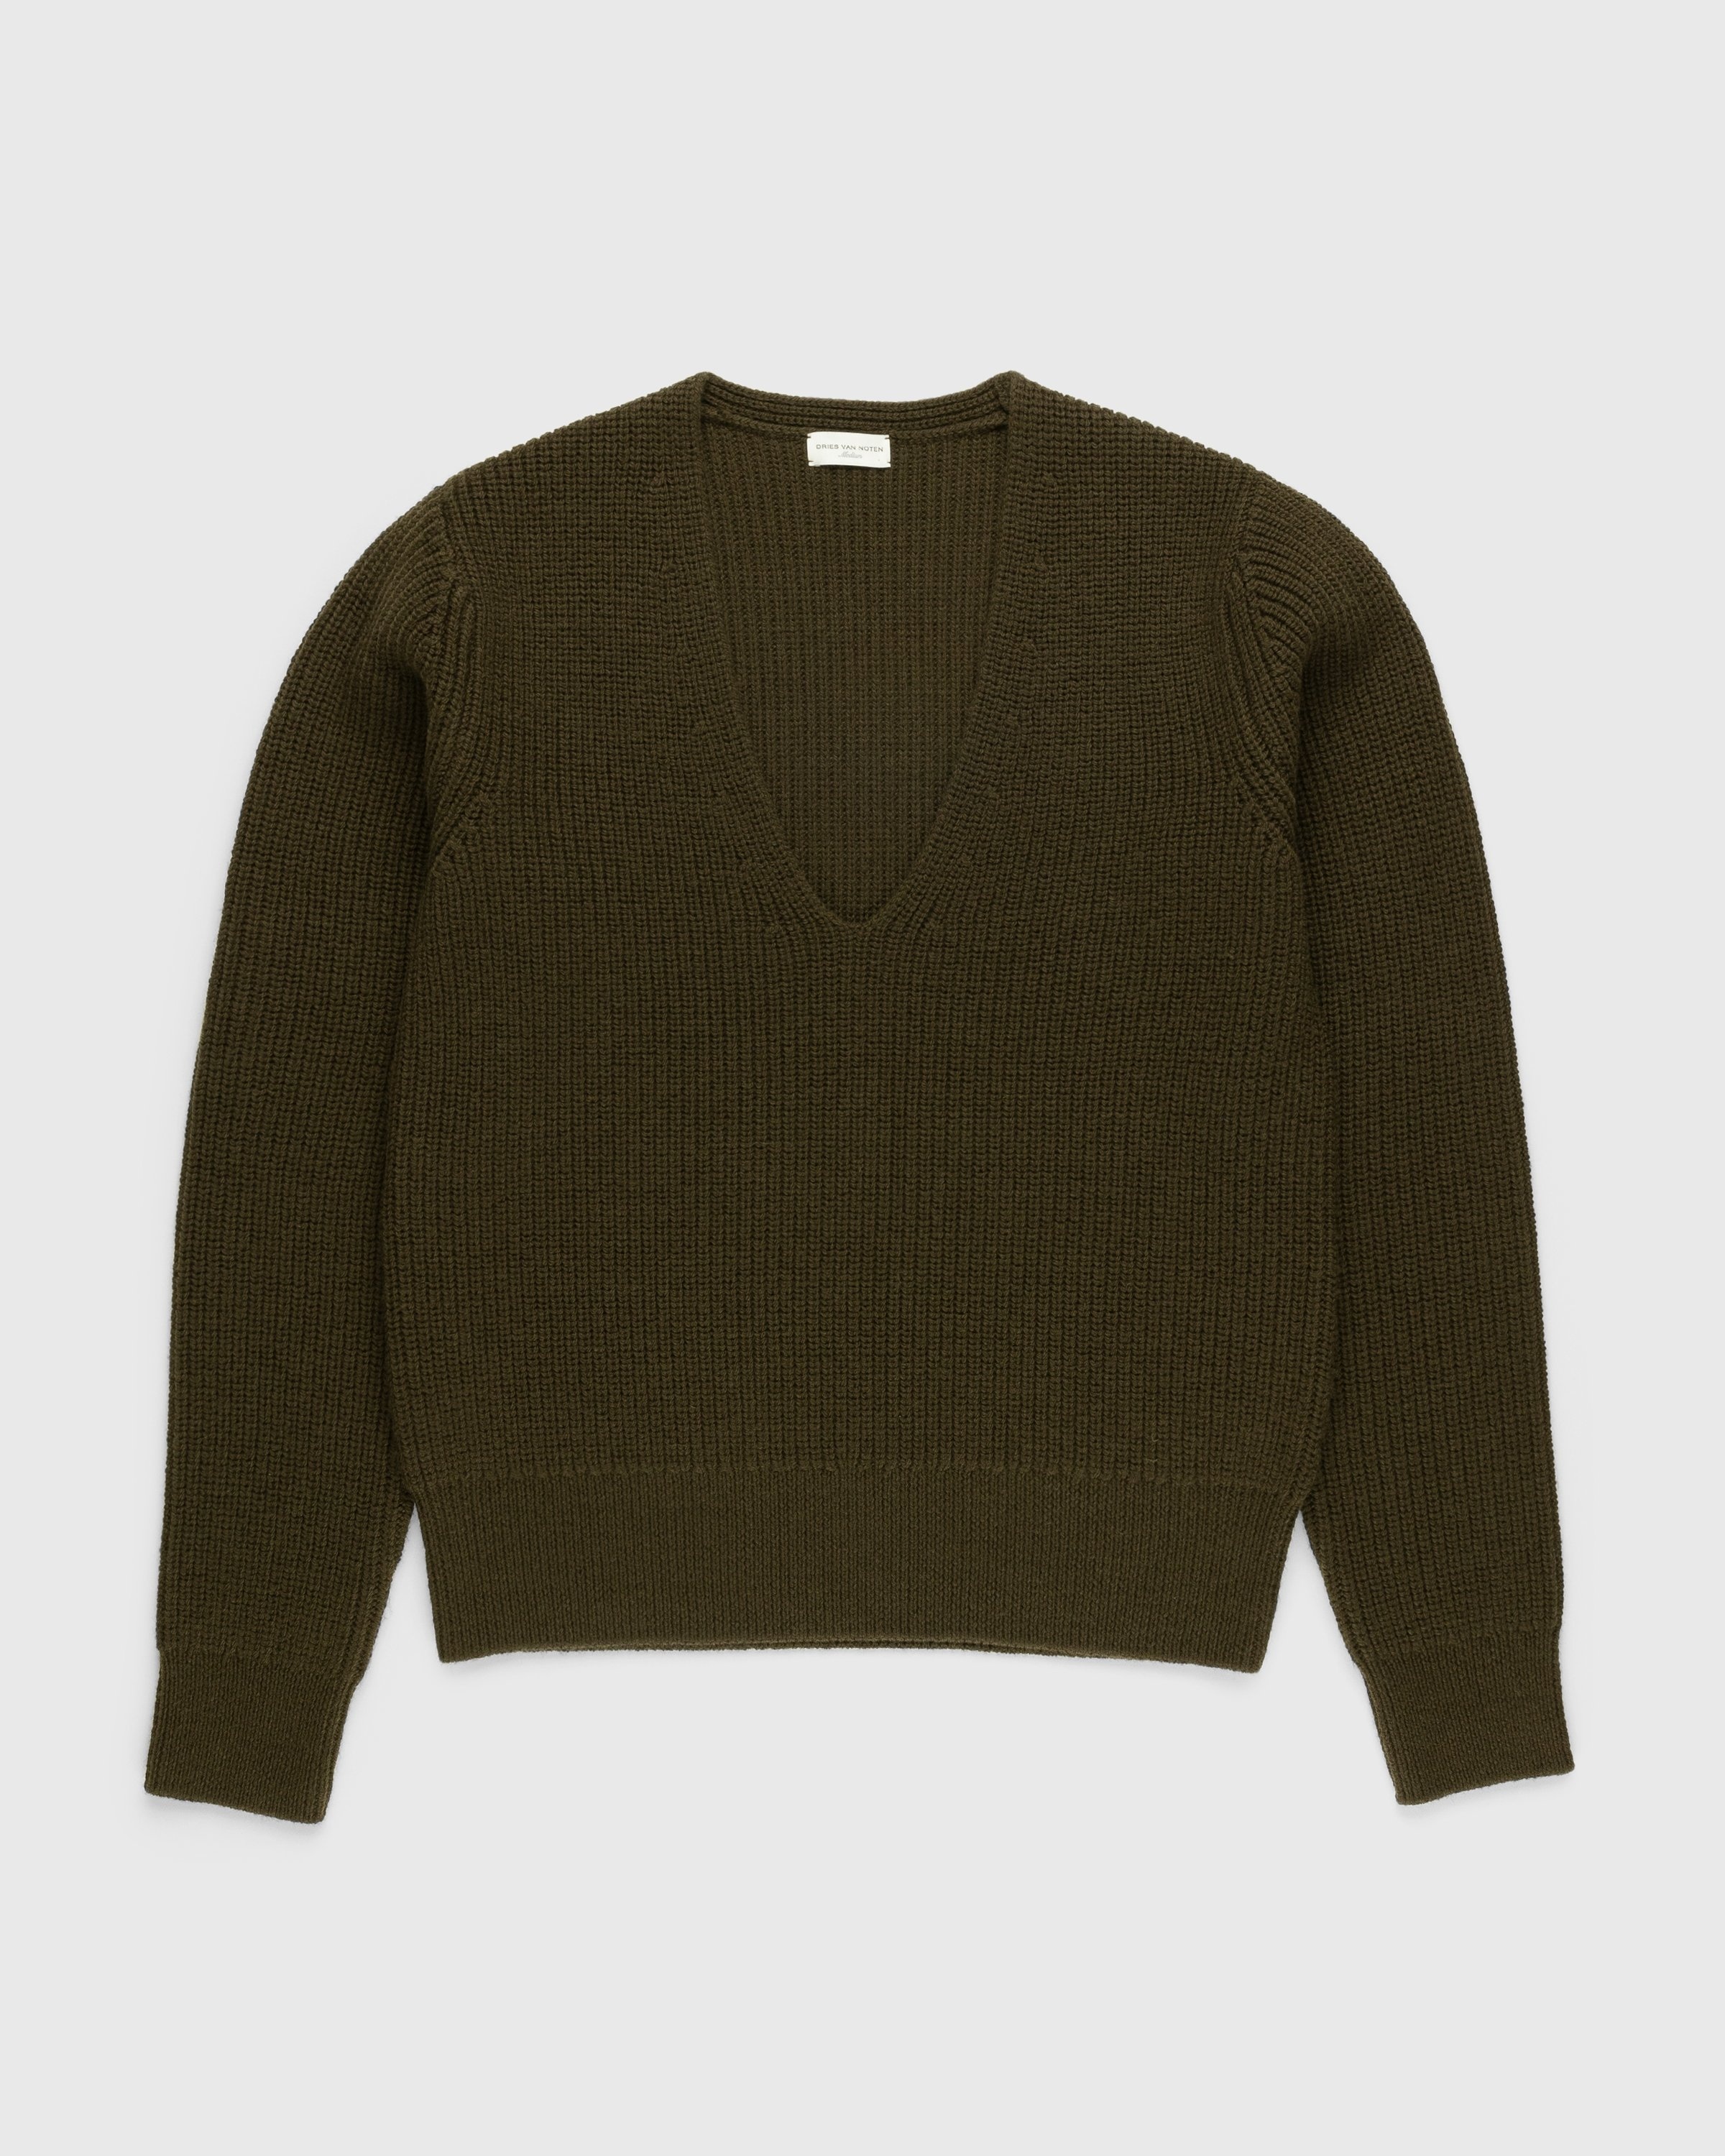 Dries van Noten – Newton Merino Sweater Green - Knitwear - Green - Image 1